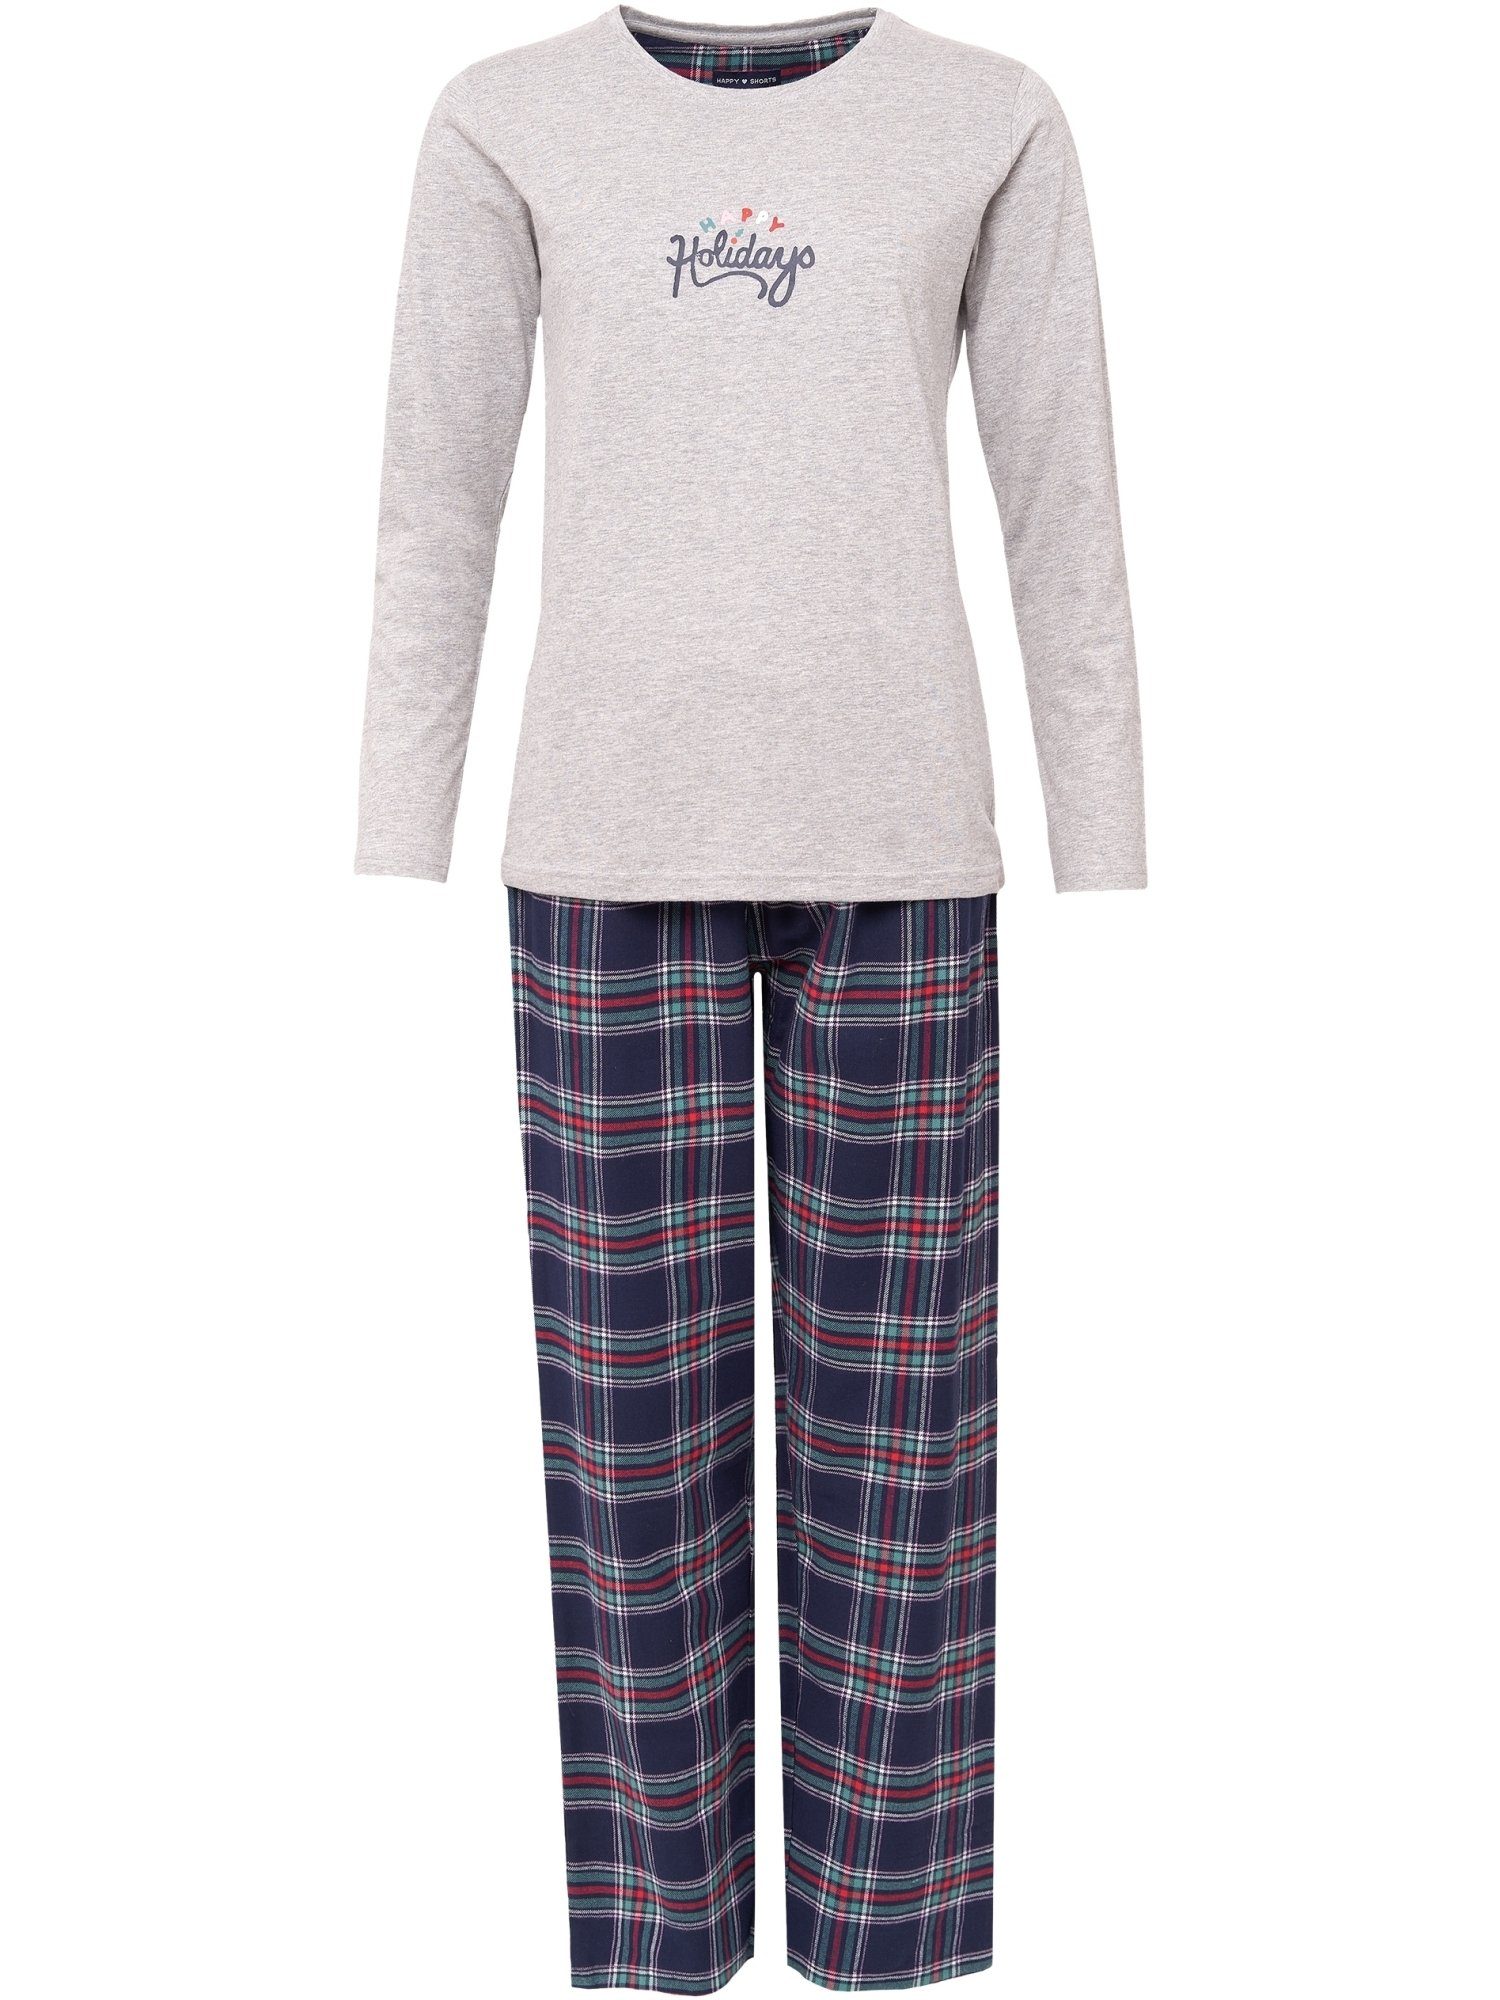 HAPPY SHORTS Pyjama Xmas (2 tlg) schlafanzug schlafmode bequem checkgreymel